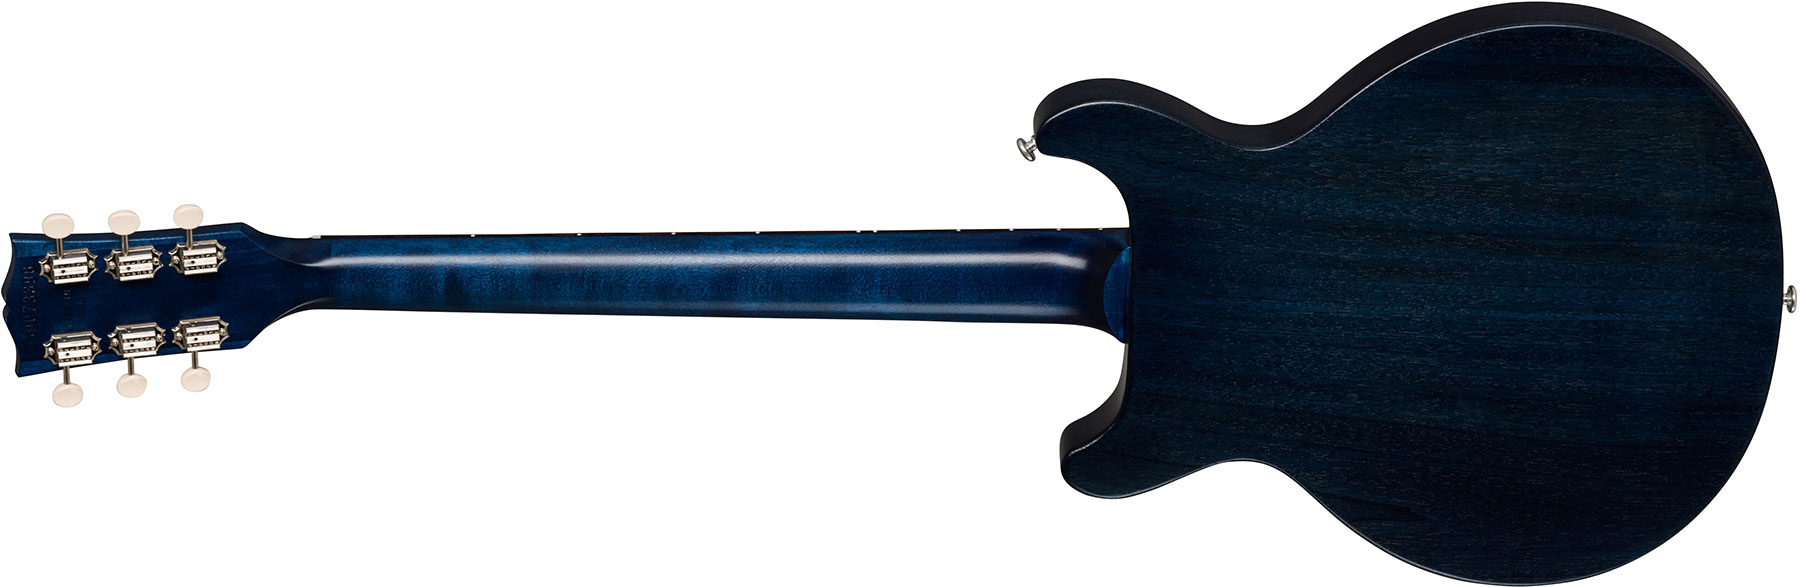 Gibson Les Paul Junior Tribute 2019 P90 Ht Rw - Blue Stain - Enkel gesneden elektrische gitaar - Variation 2